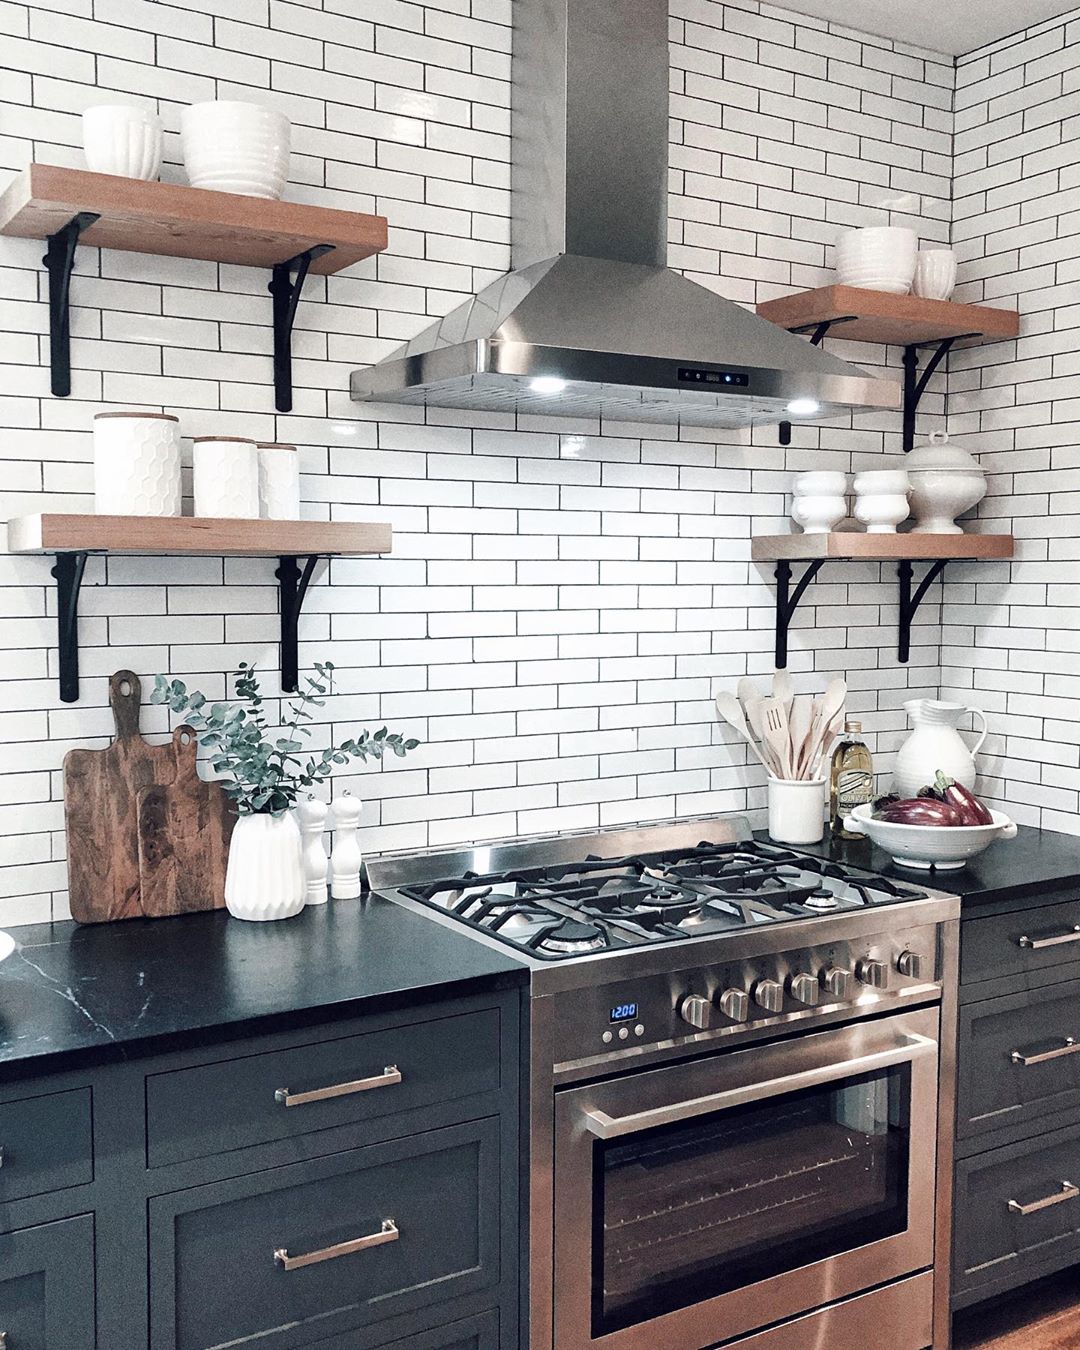 kitchen with subway tile backsplash with open shelving photo by Instagram user @henhurst